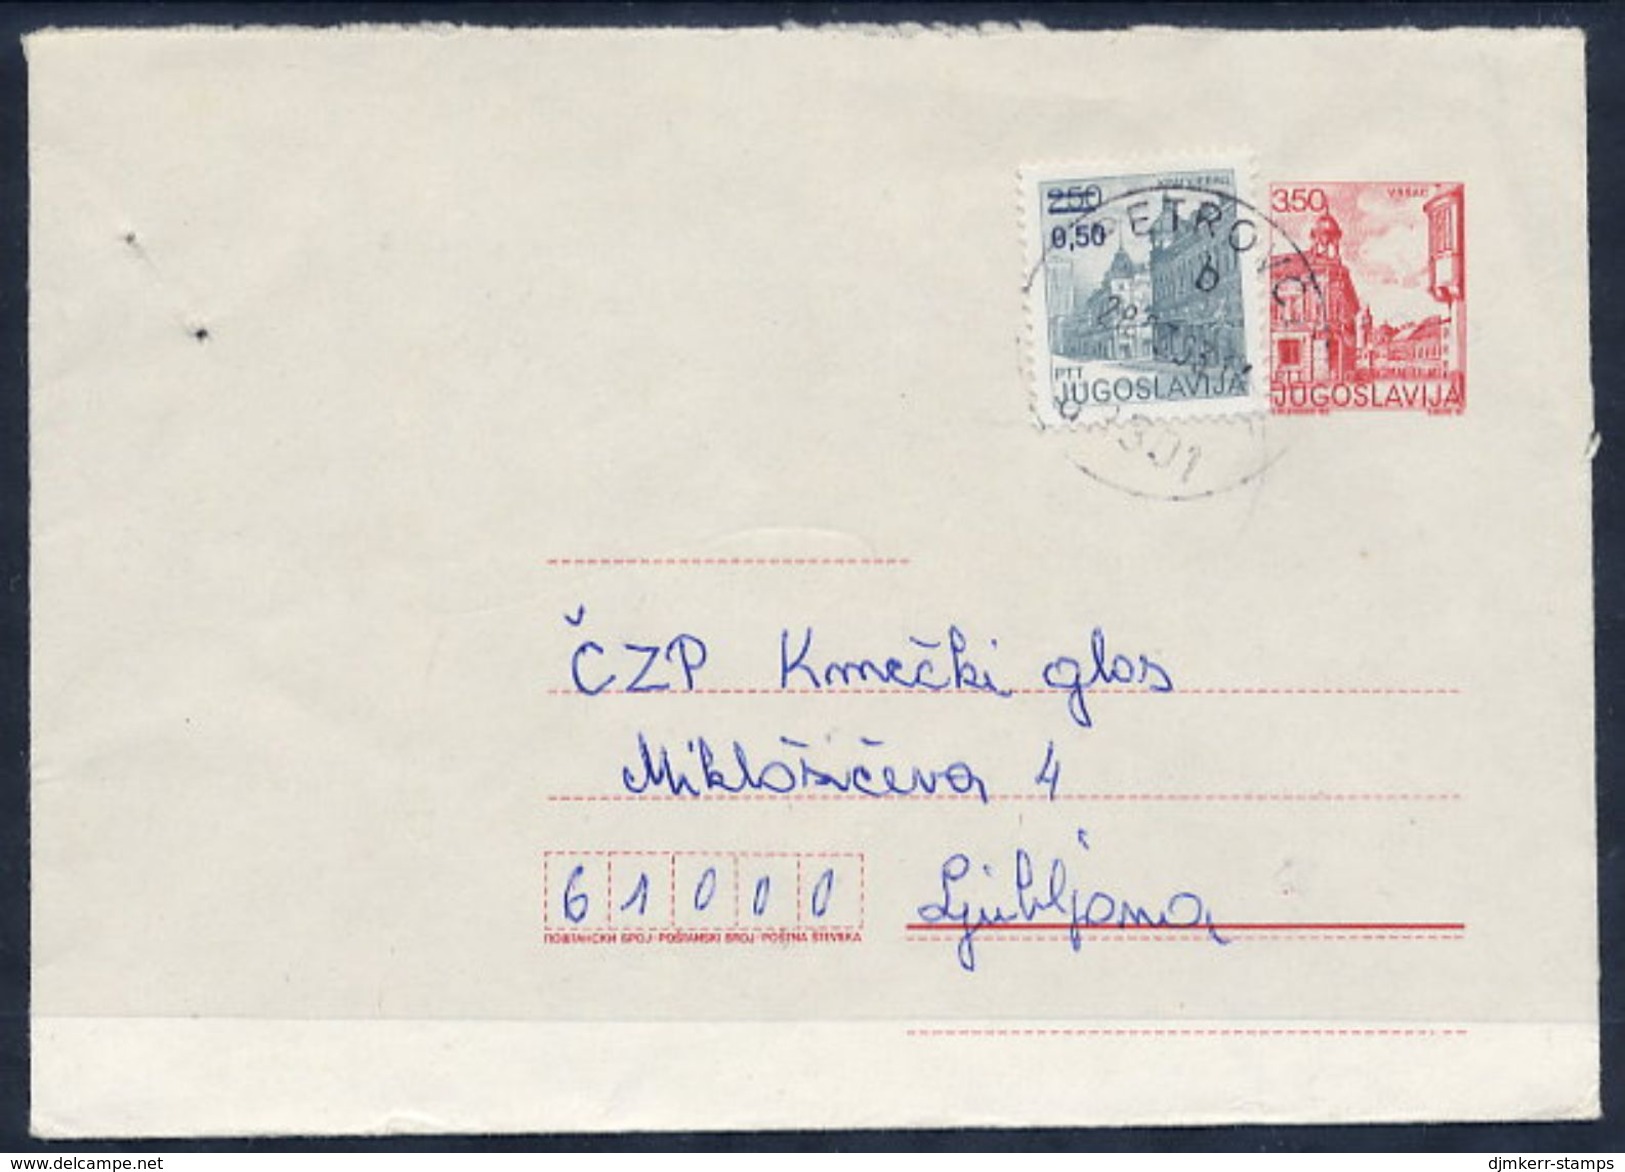 YUGOSLAVIA 1981 Tourism 3.50 D.stationery Envelope Used With Additional Franking.  Michel U63 - Postal Stationery